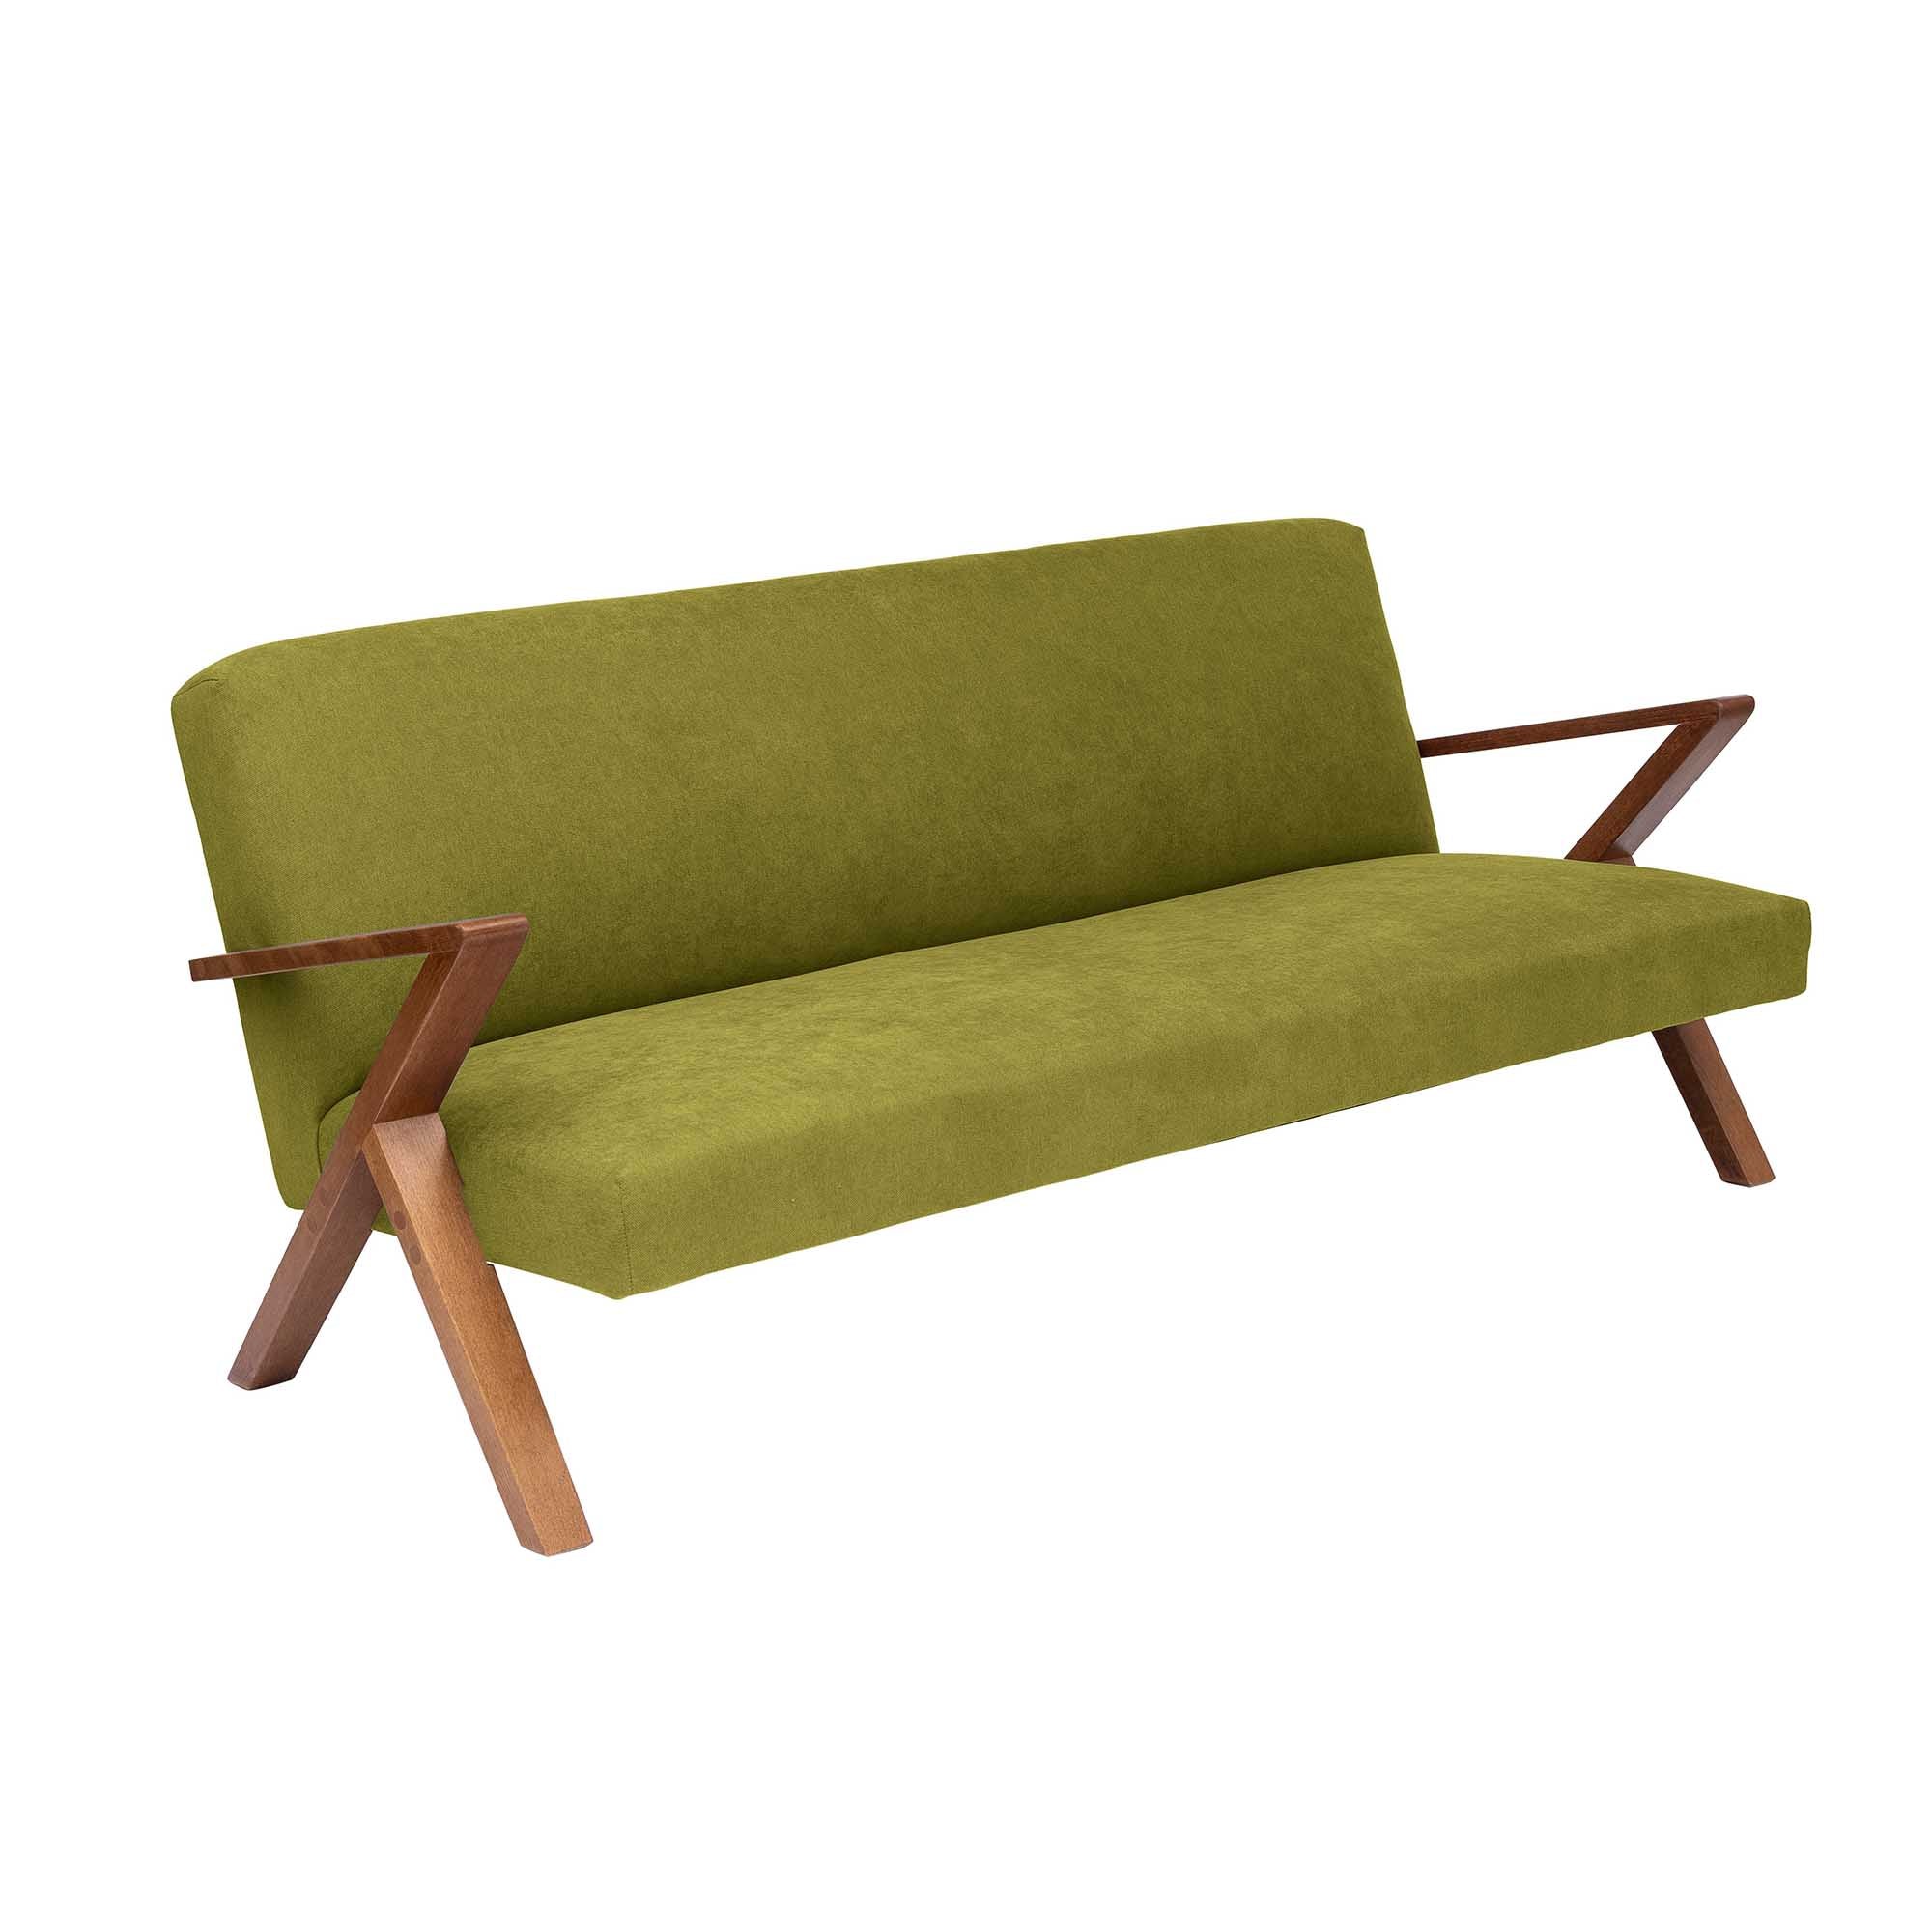  4-seater Sofa Beech Wood Frame, Walnut Colour green fabric,half-side view